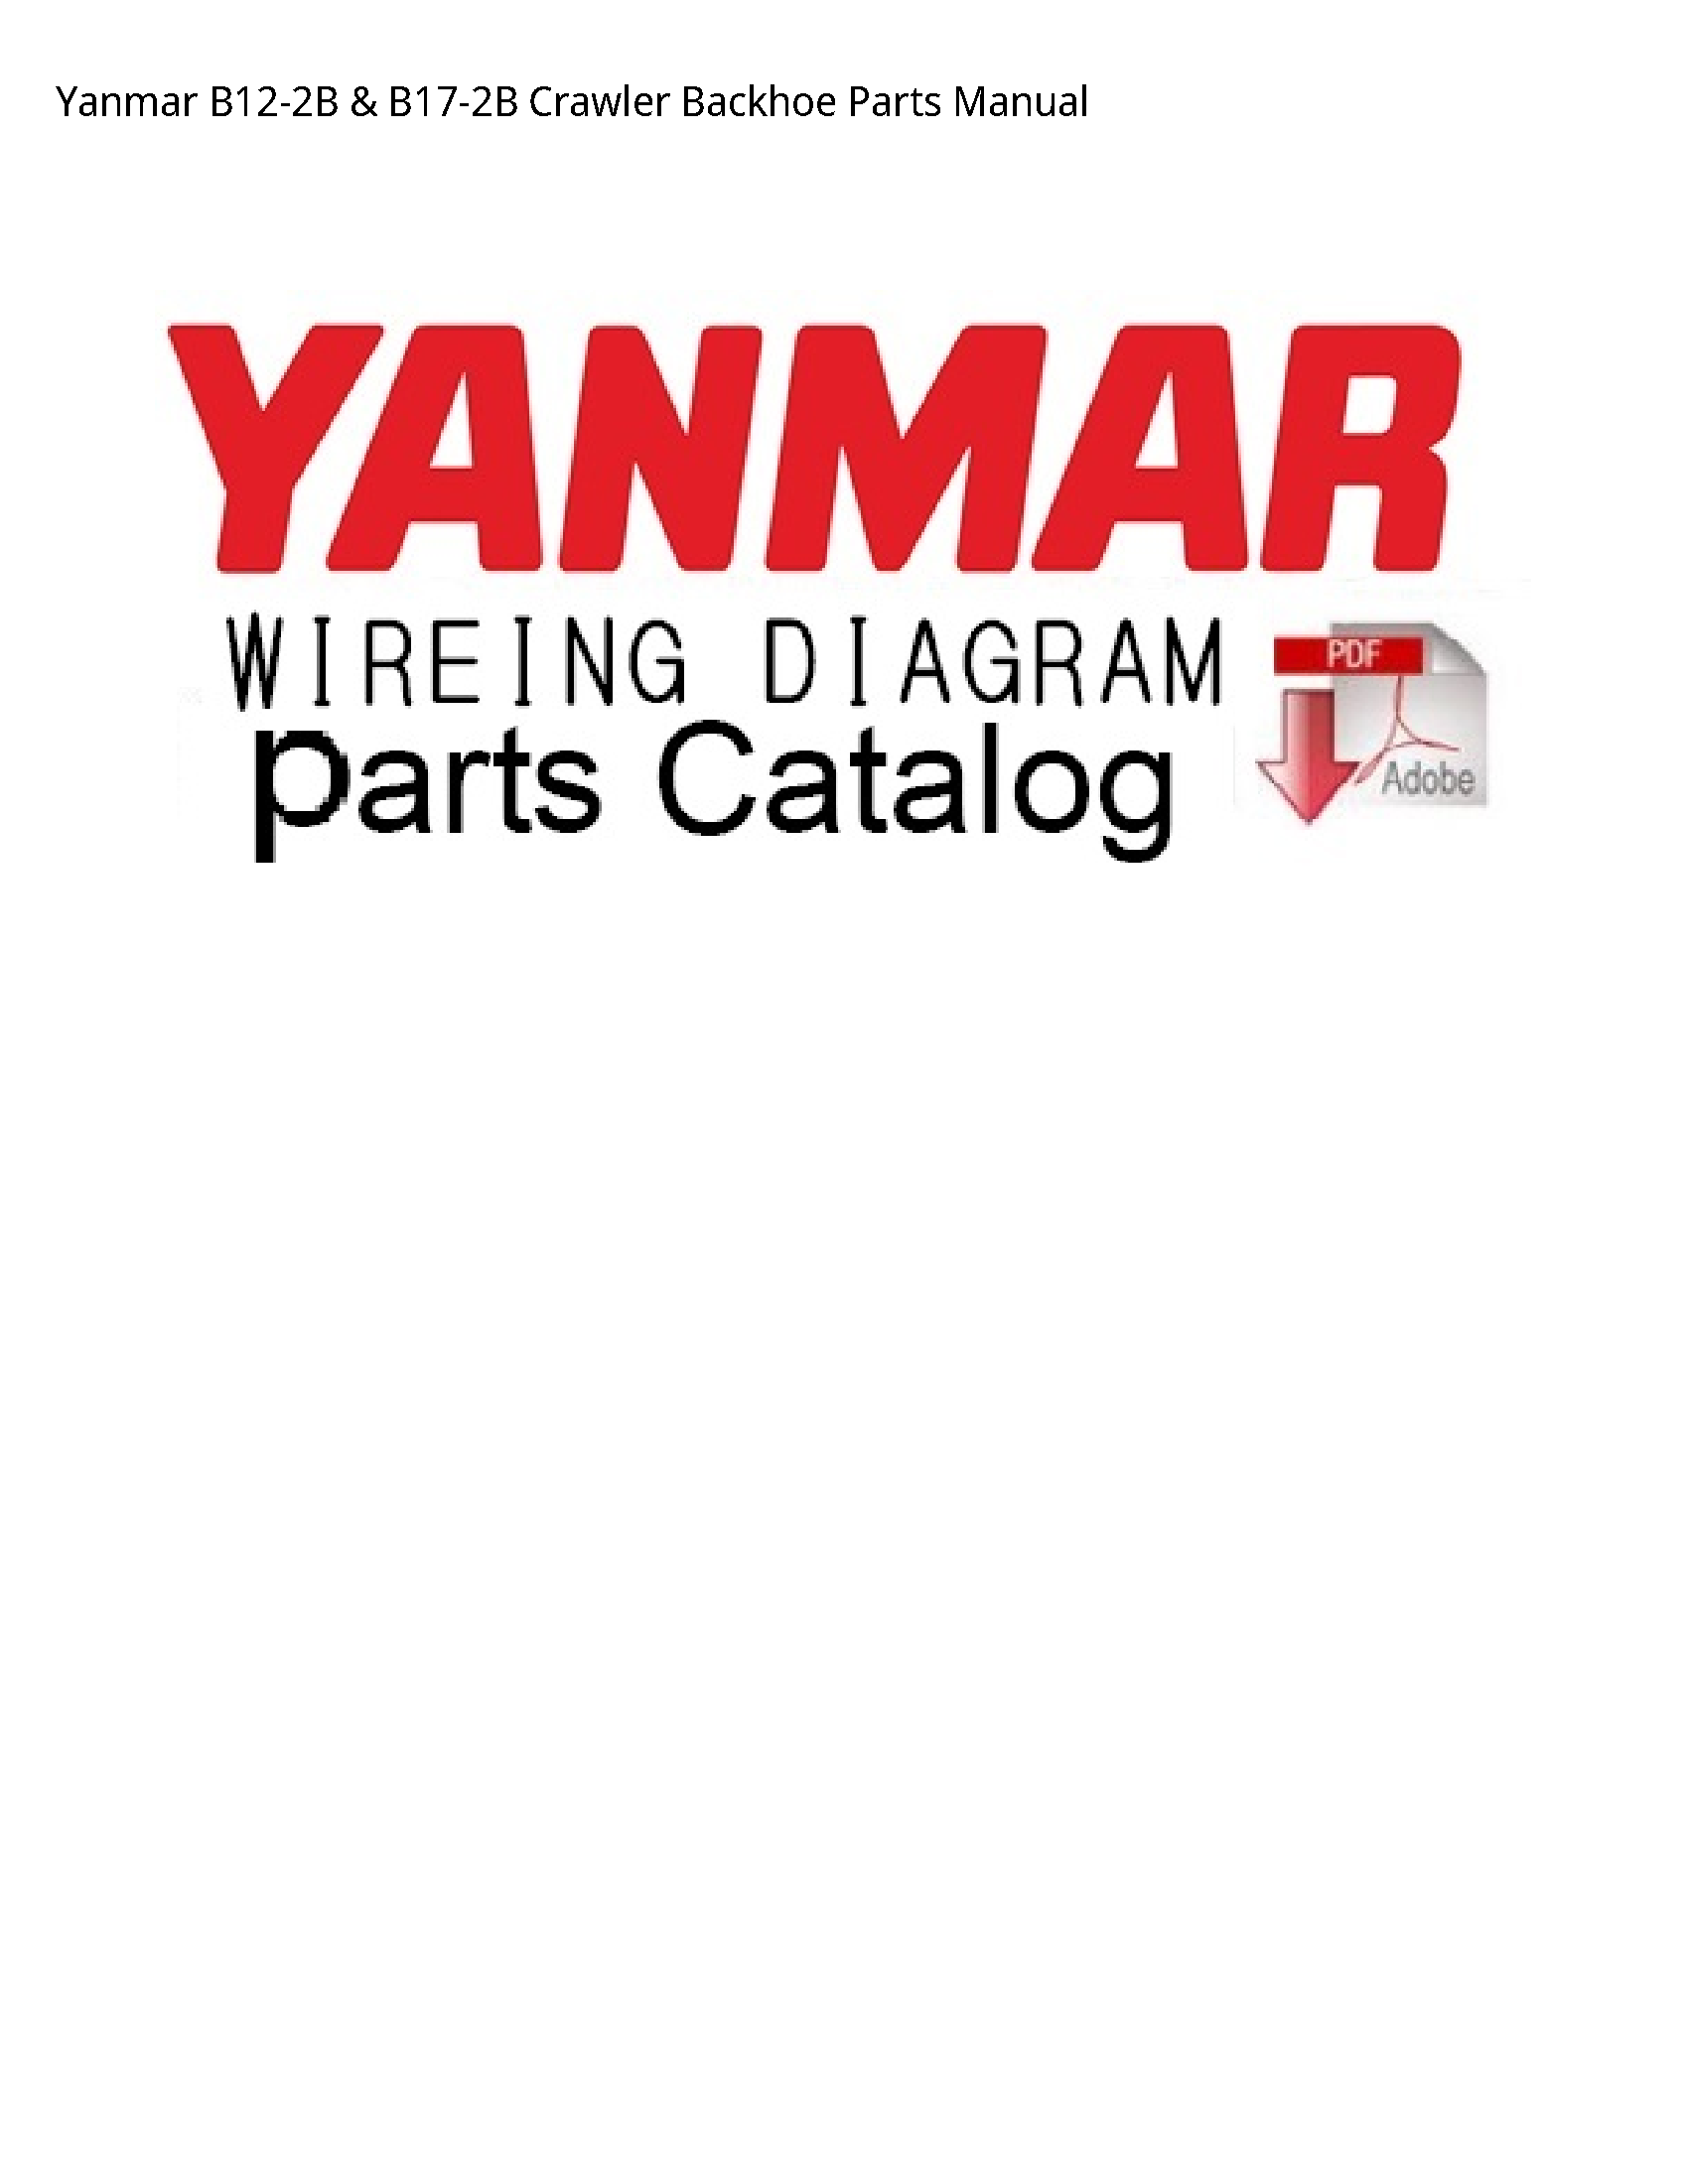 Yanmar B12-2B Crawler Backhoe Parts manual